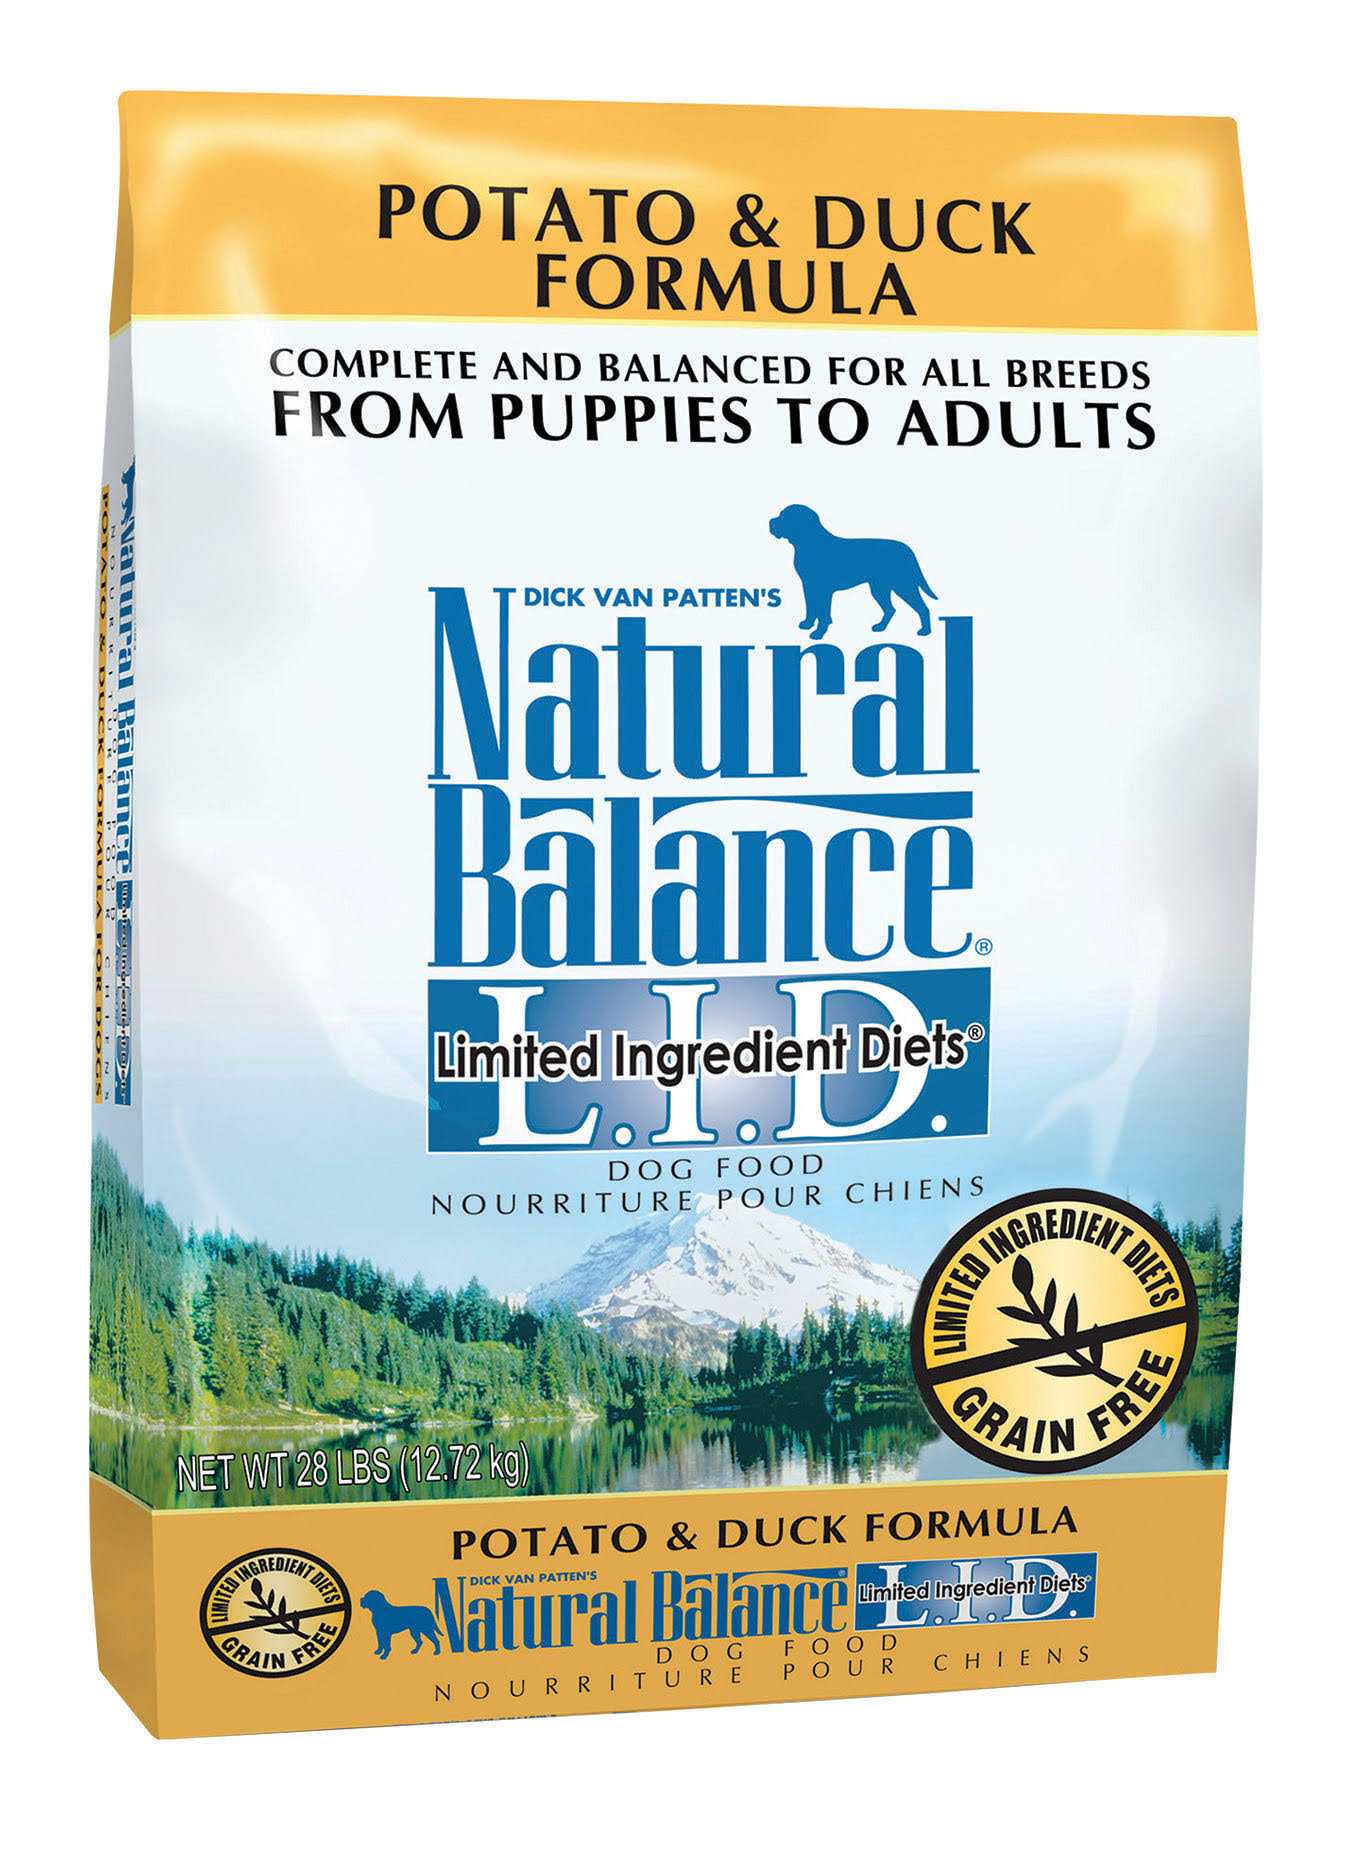 Natural Balance Limited Ingredient Diets Dog Food, Grain Free, Duck & Potato Formula - 24 lb